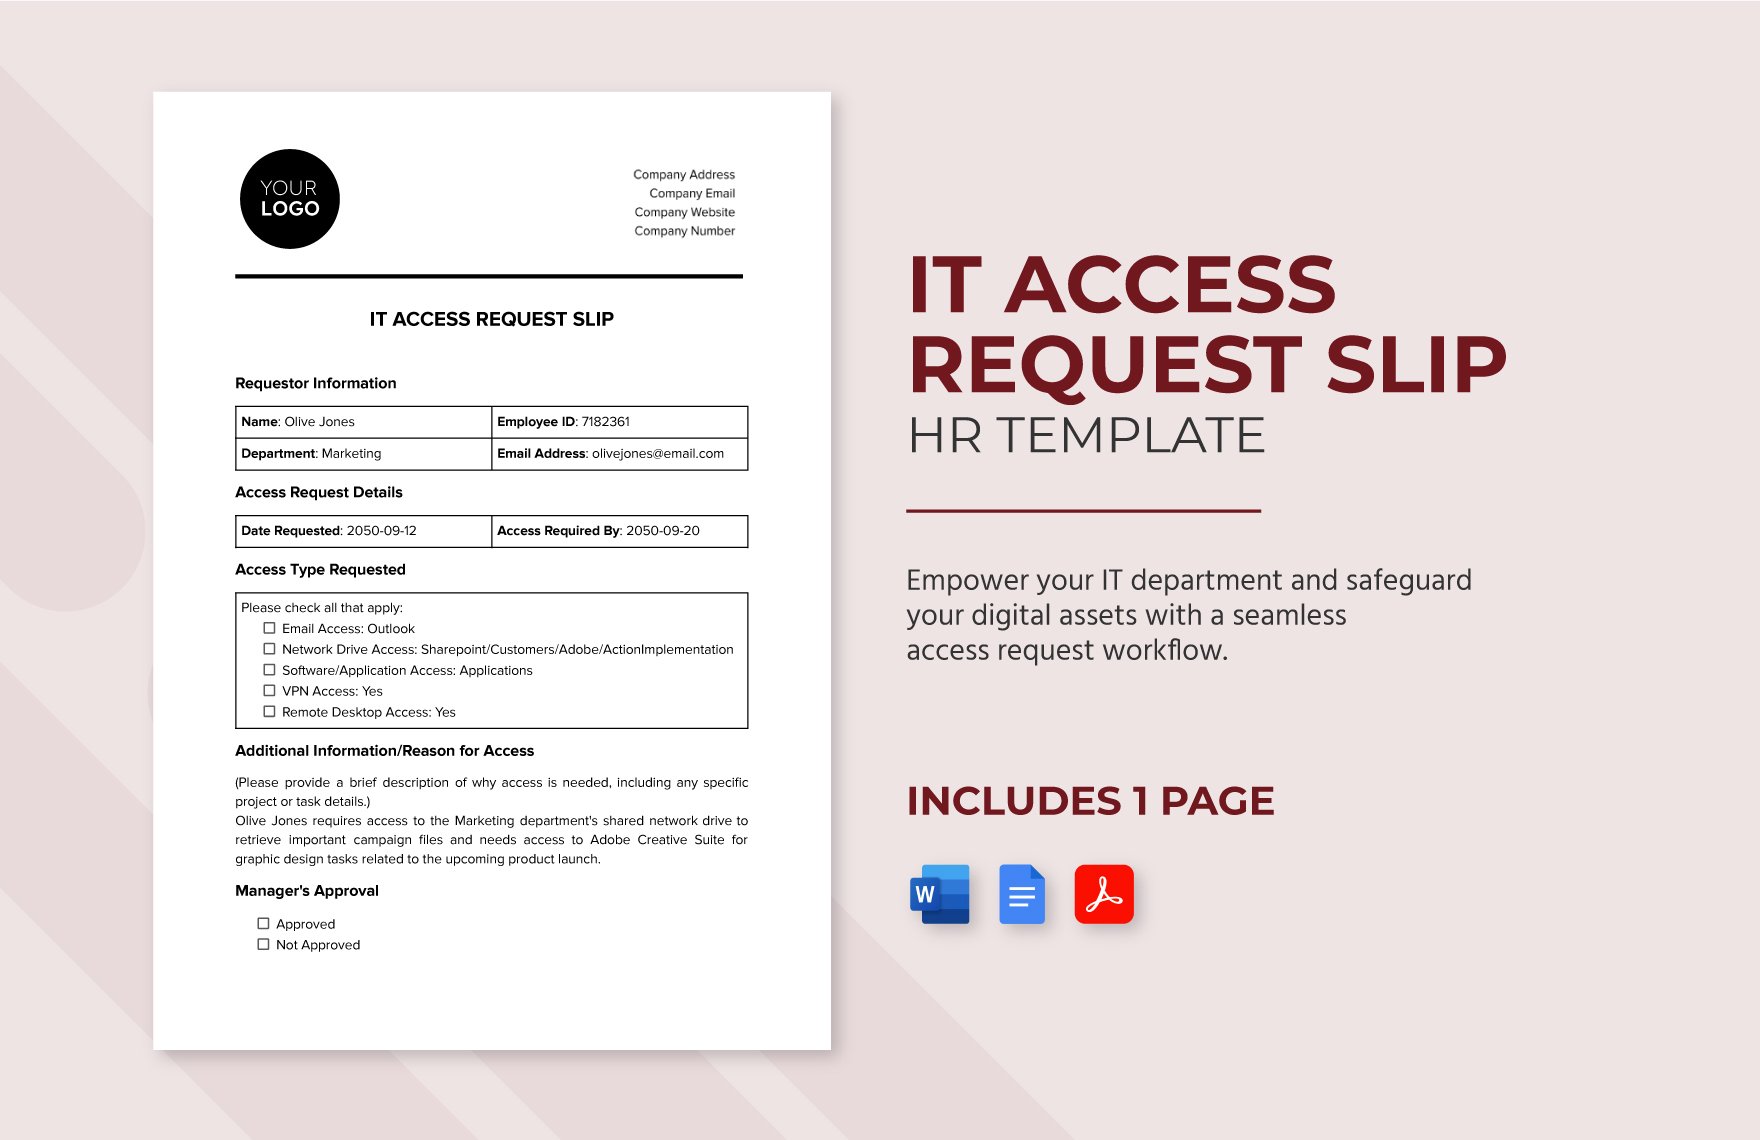 IT Access Request Slip HR Template